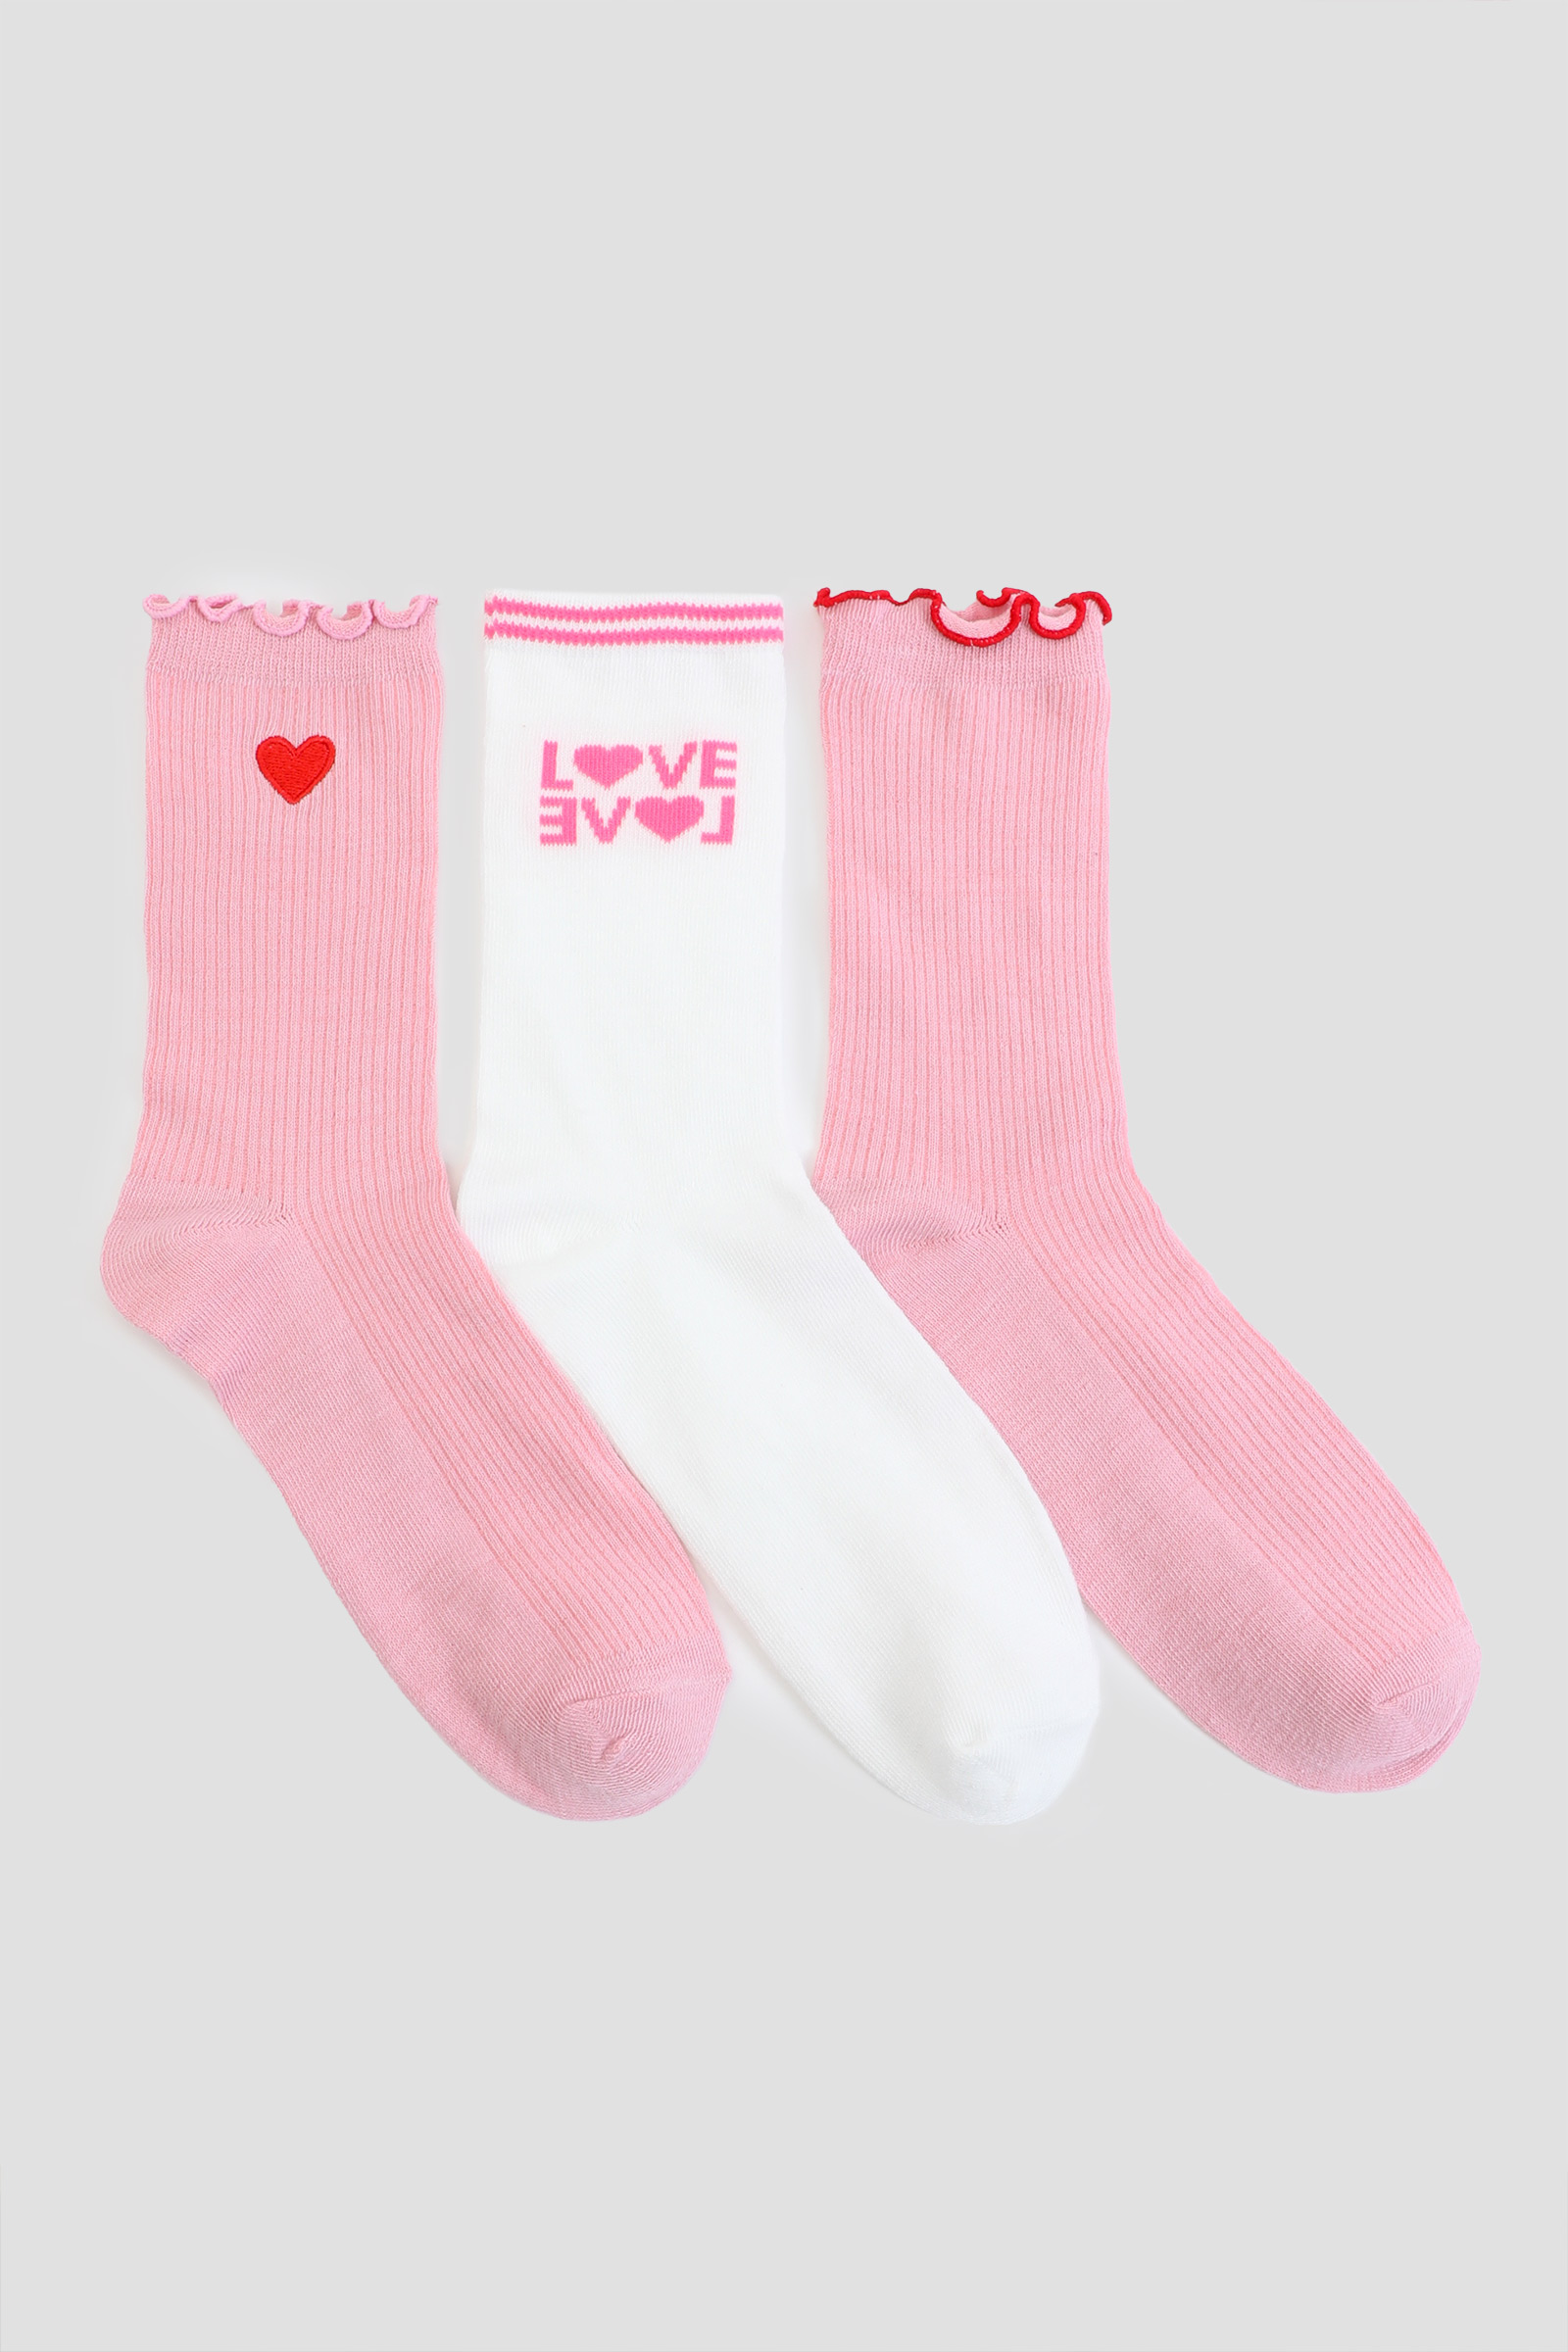 Ardene 3-Pack Valentine's Day Socks in Light Pink | Polyester/Spandex